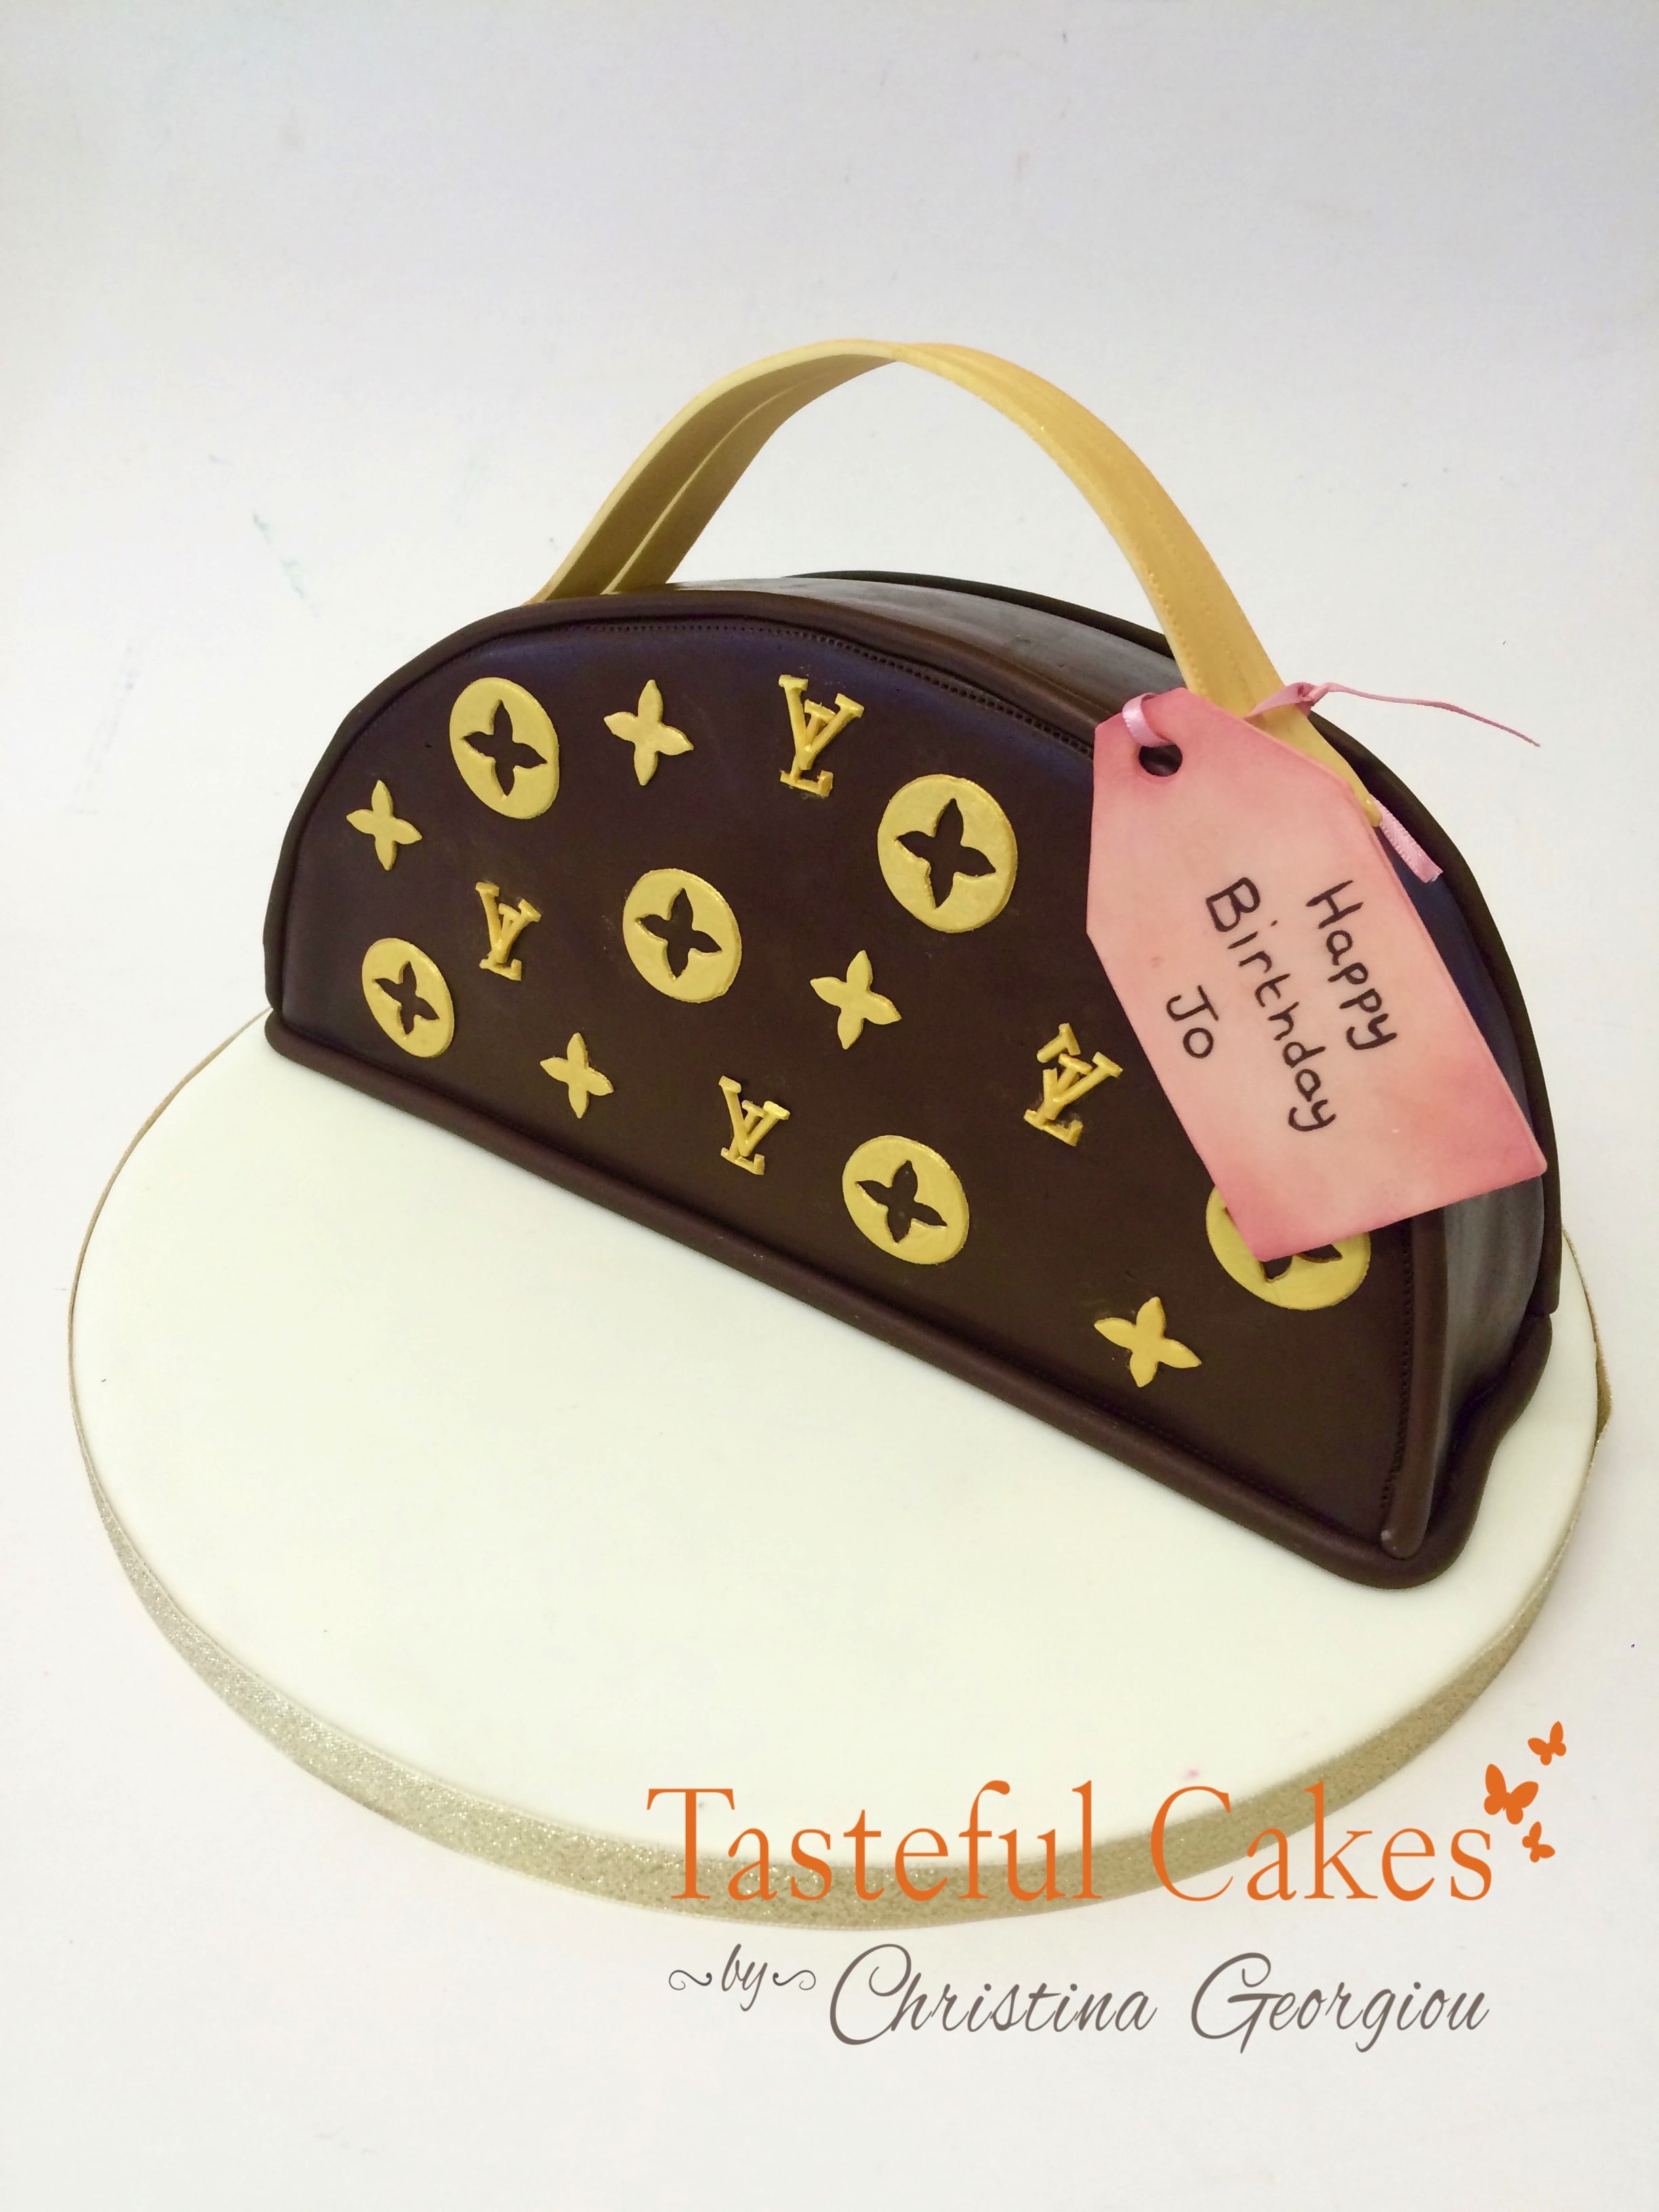 Tasteful Cakes By Christina Georgiou | Louis Vuitton Handbag Cake